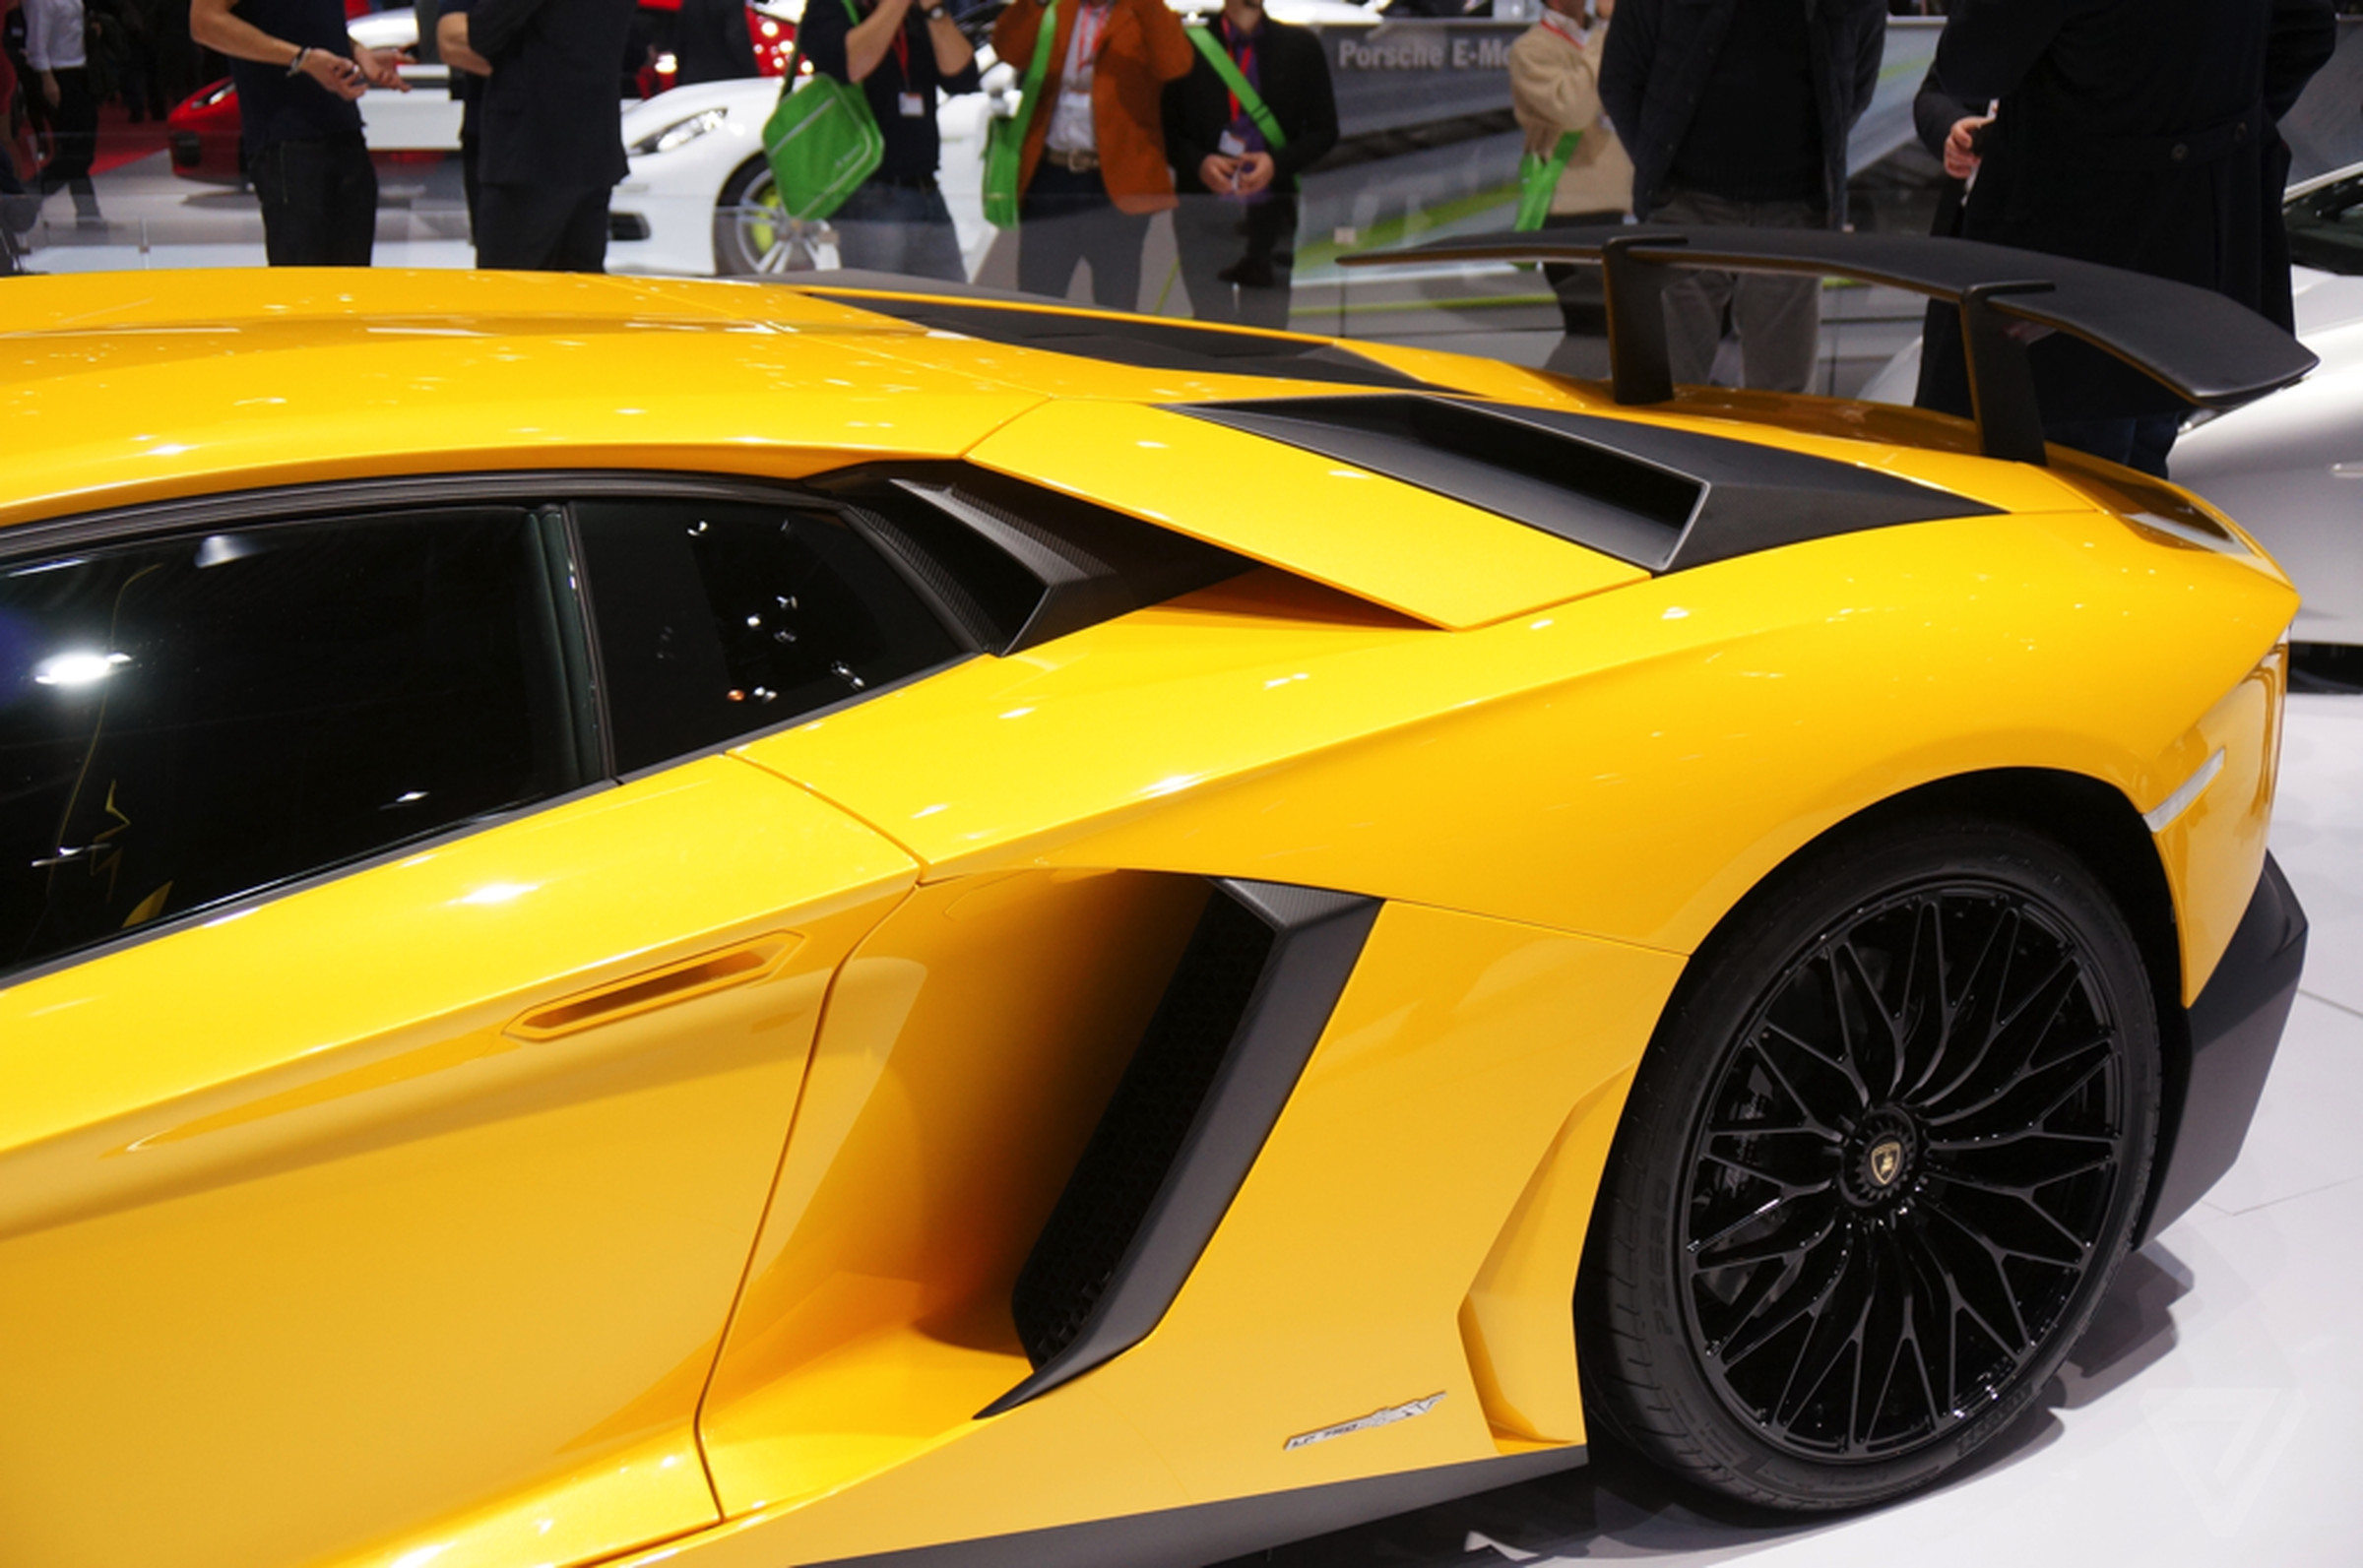 Lamborghini Aventador Superveloce at Geneva Motor Show 2015